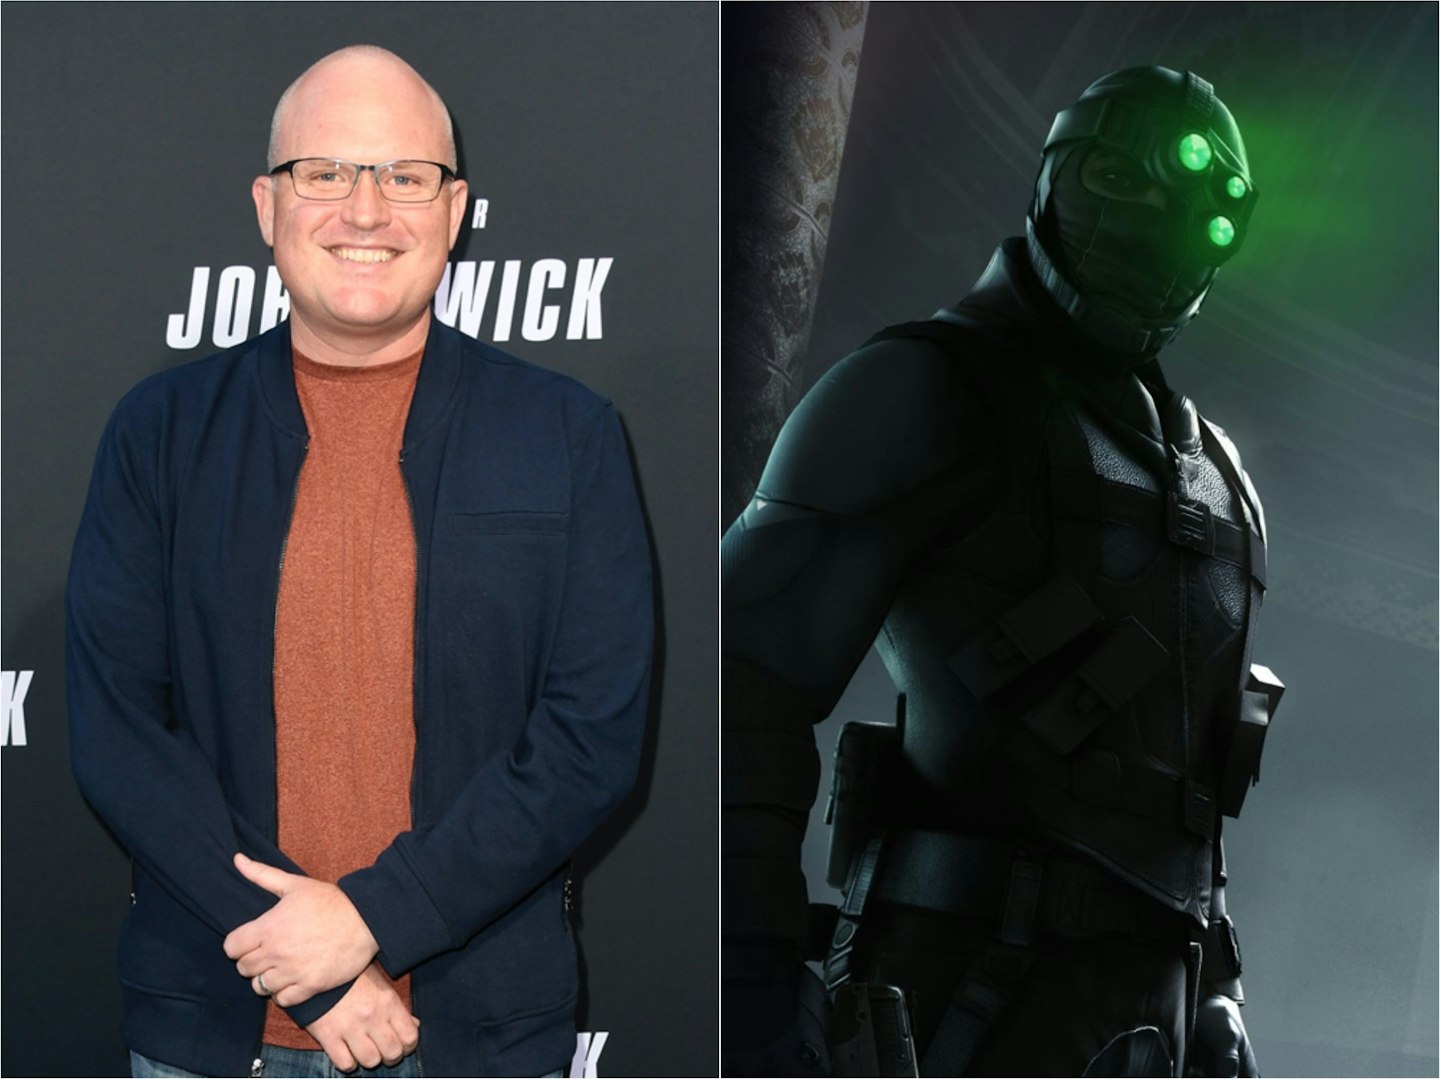 Splinter Cell Netflix anime series announced with John Wick writer